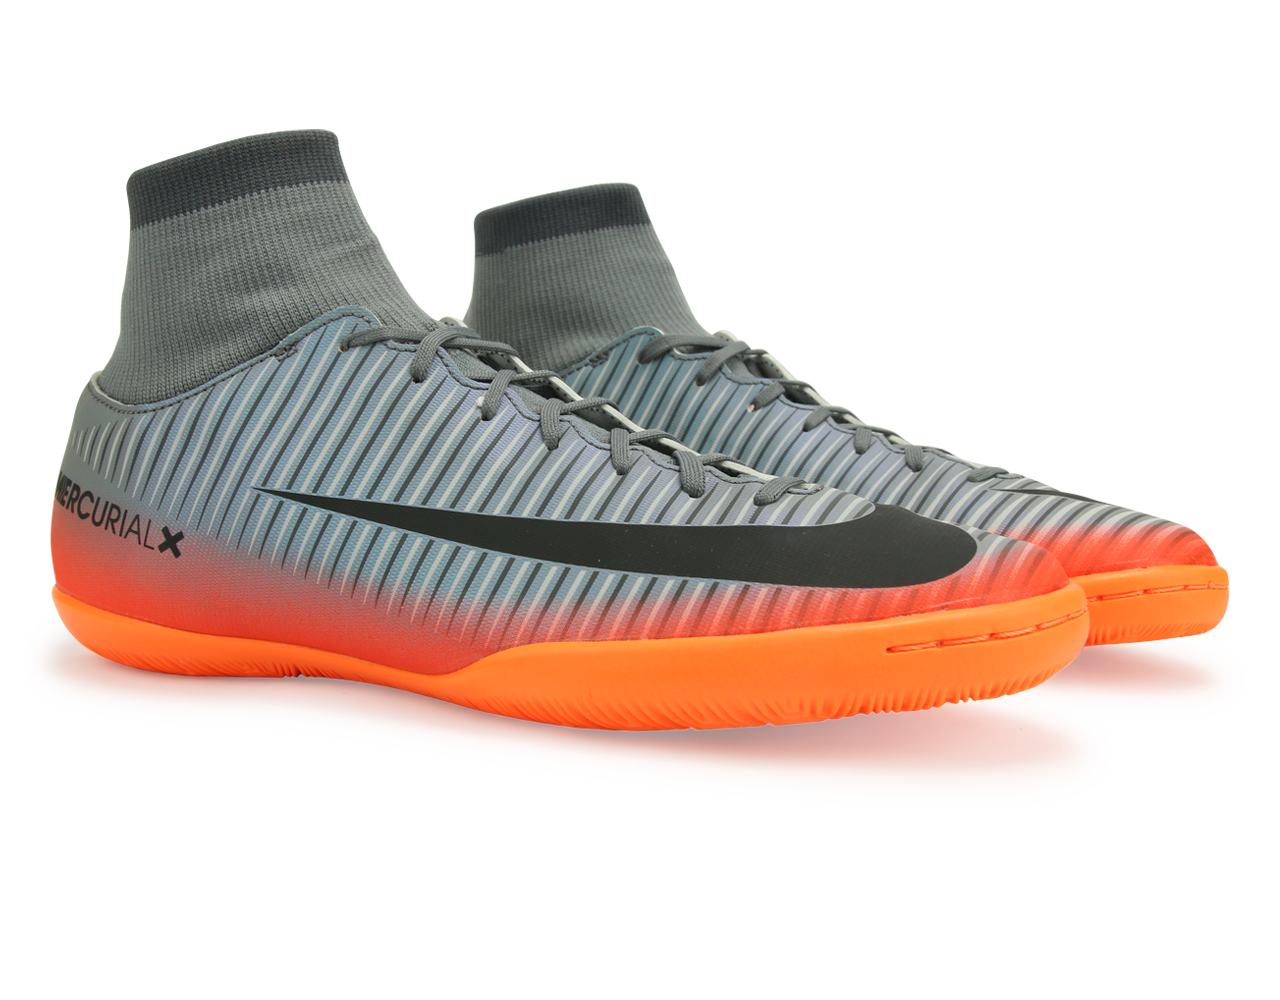 Nike Men's MercurialX Victory VI CR7 Dynamic Fit Indoor Soccer Shoes Cool Wolf GreyGrey/Metallic Hematite